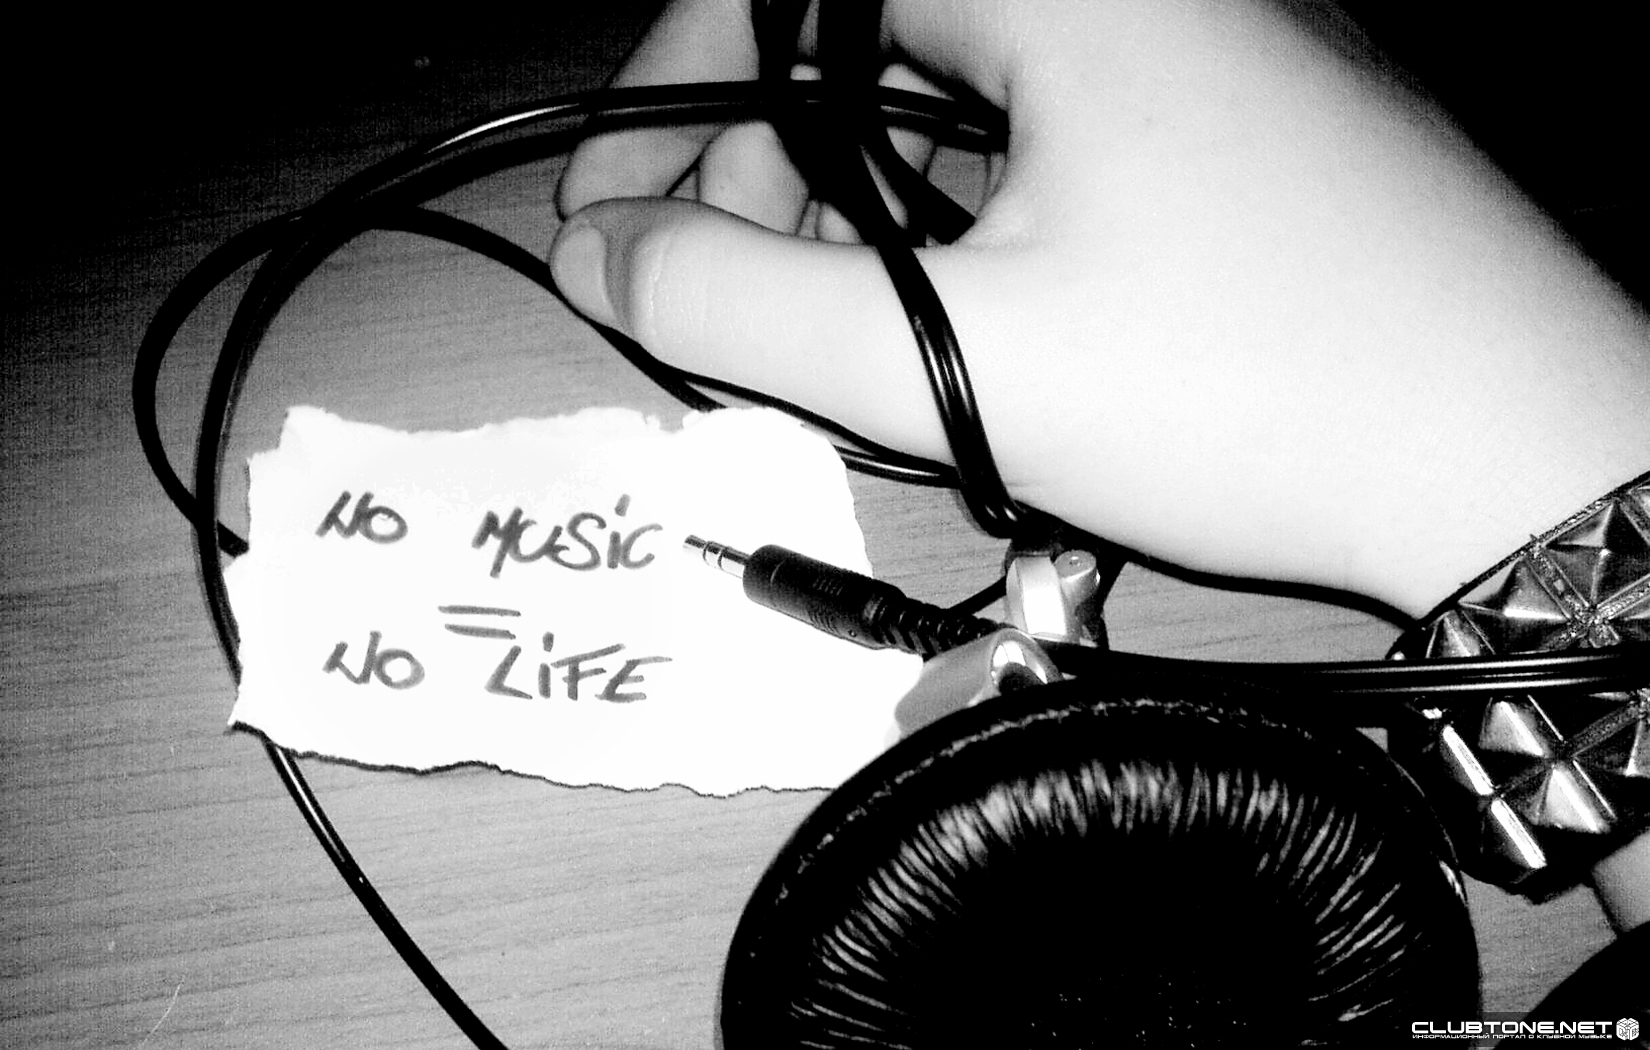 No music No life  